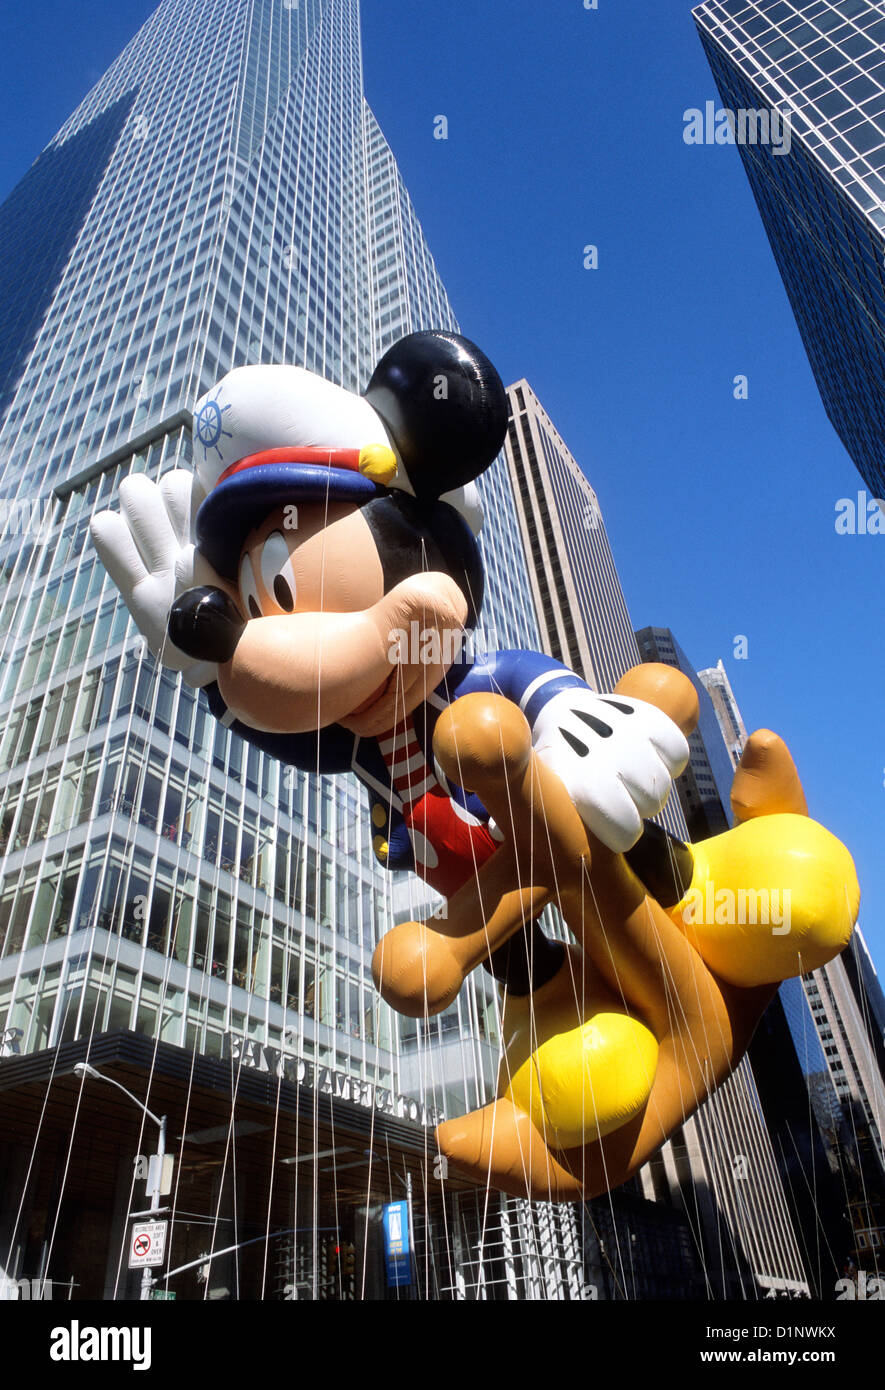 Macy's Thanksgiving Parade, Mickey le ballon Sailor, New York, Midtown Manhattan, New York.Bande dessinée personnage de dessin animé.Jour de Thanksgiving. Banque D'Images